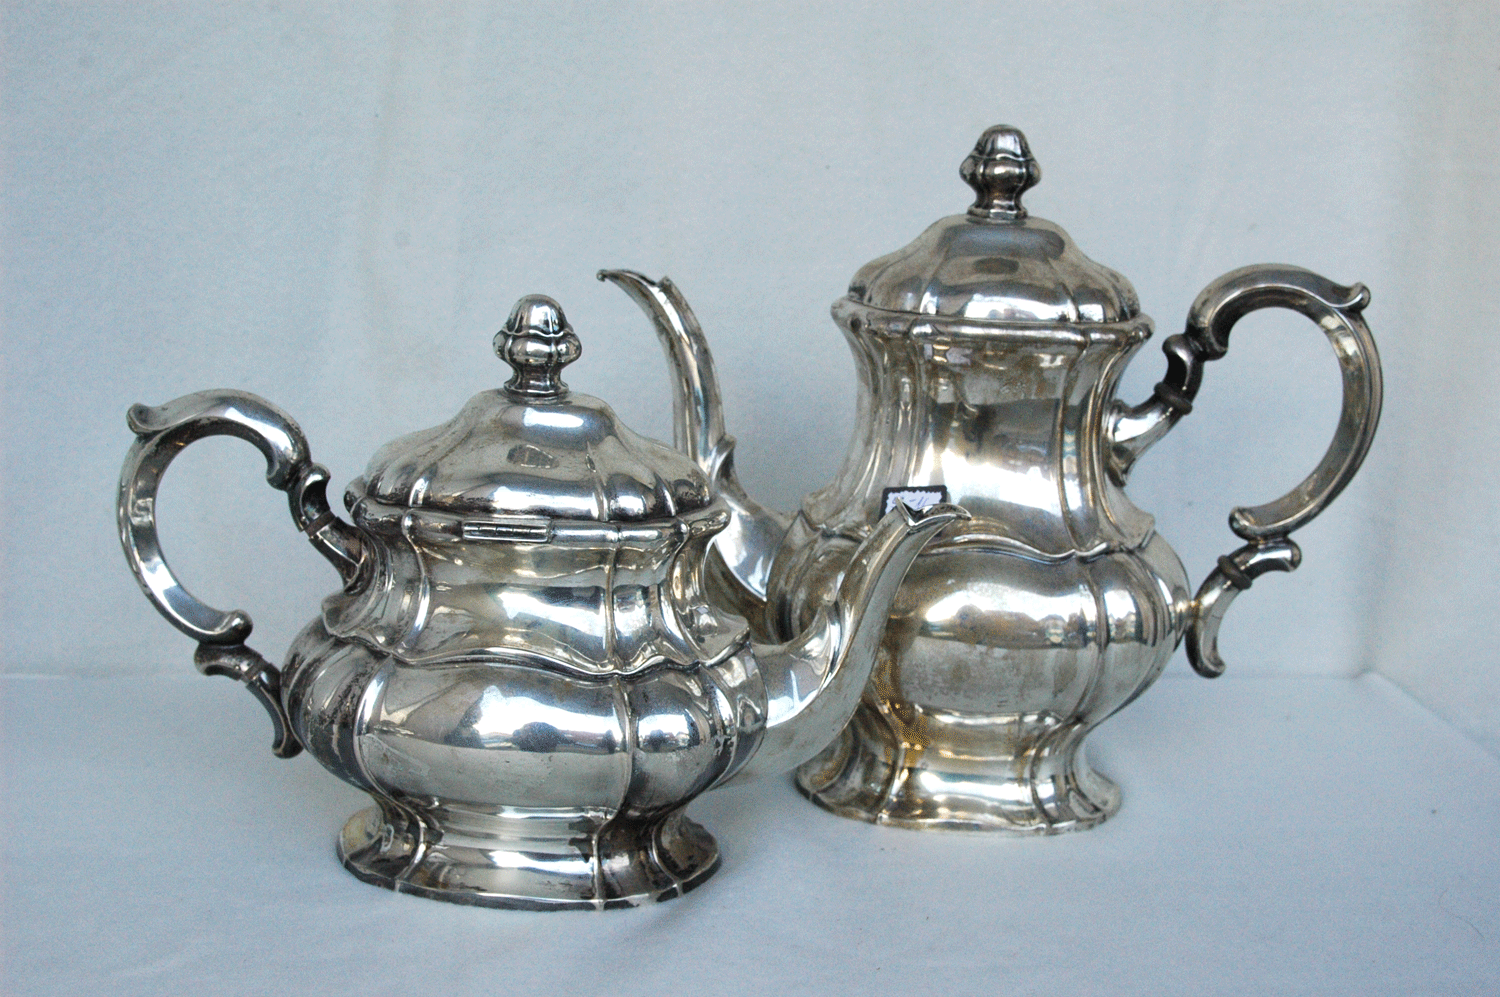 Kaffeekanne, Teekanne, Rahmservice, 835/- Silber, 1670 g - Bild 3 aus 7